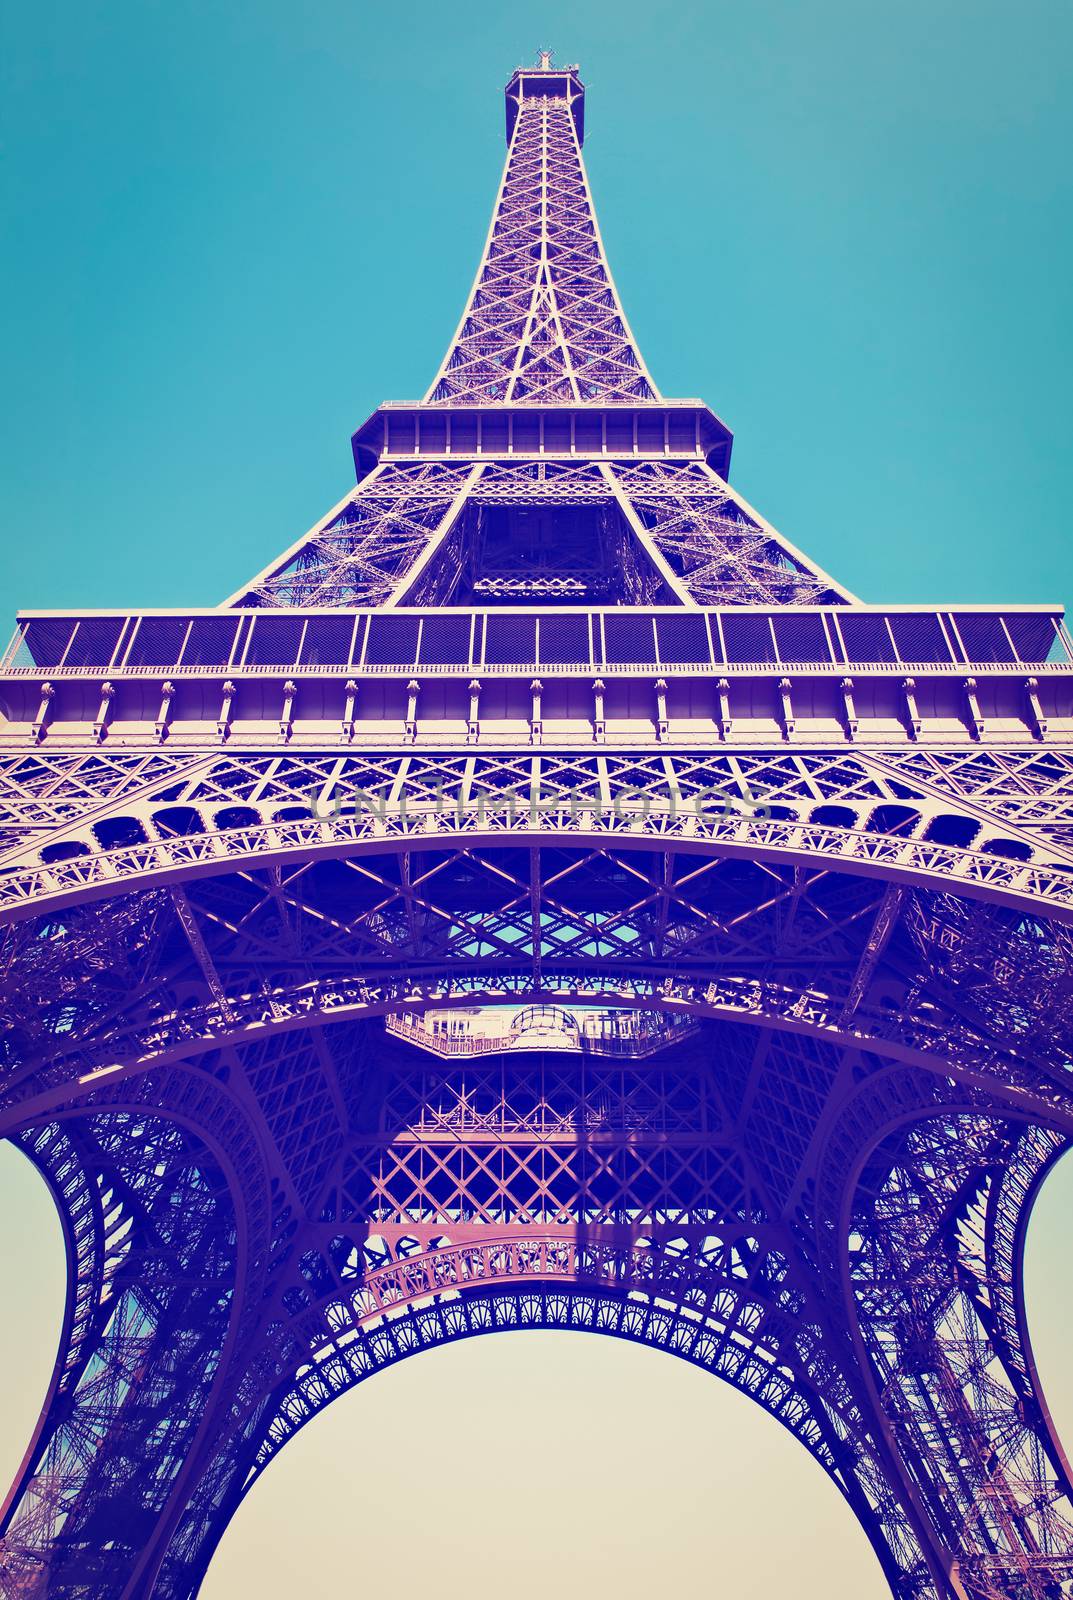 The Eiffel Tower in Paris, Instagram effect